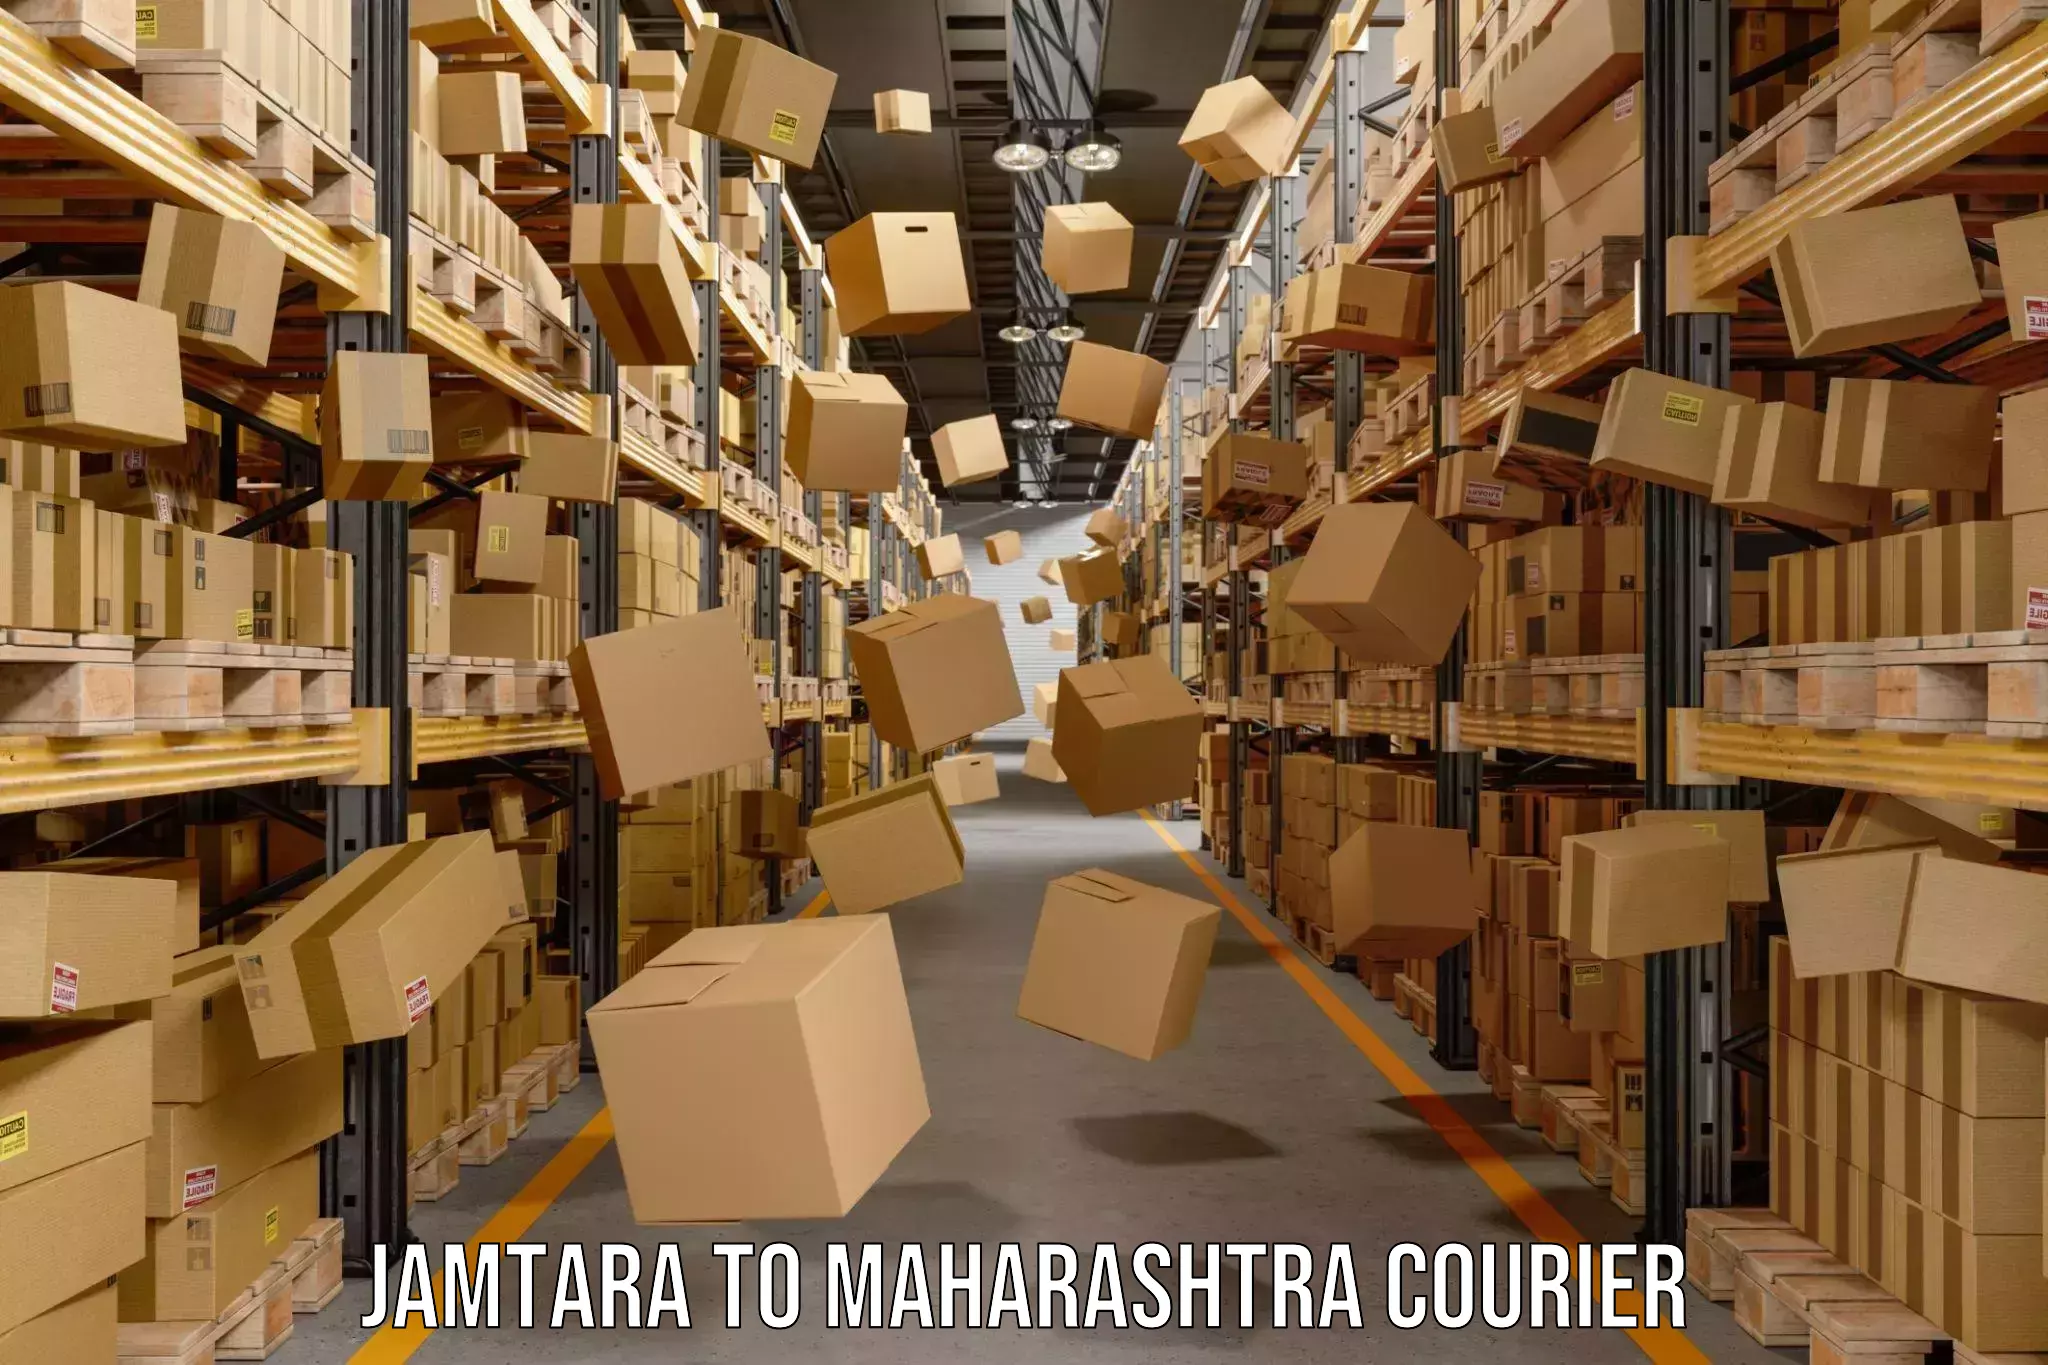 Package delivery network Jamtara to Shivajinagar